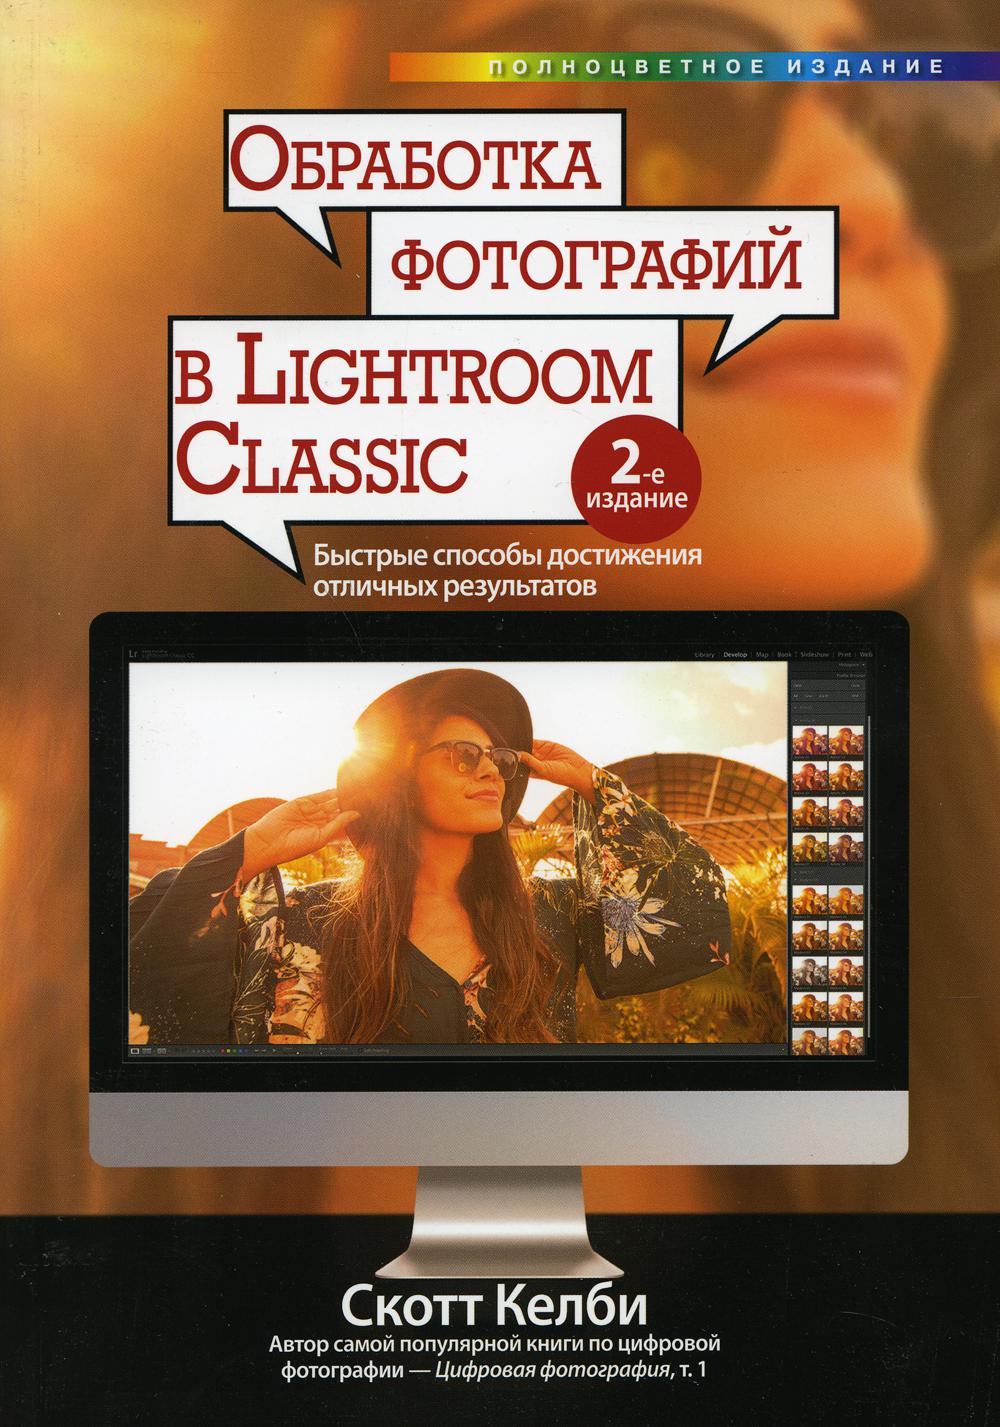    Lightroom Classic     